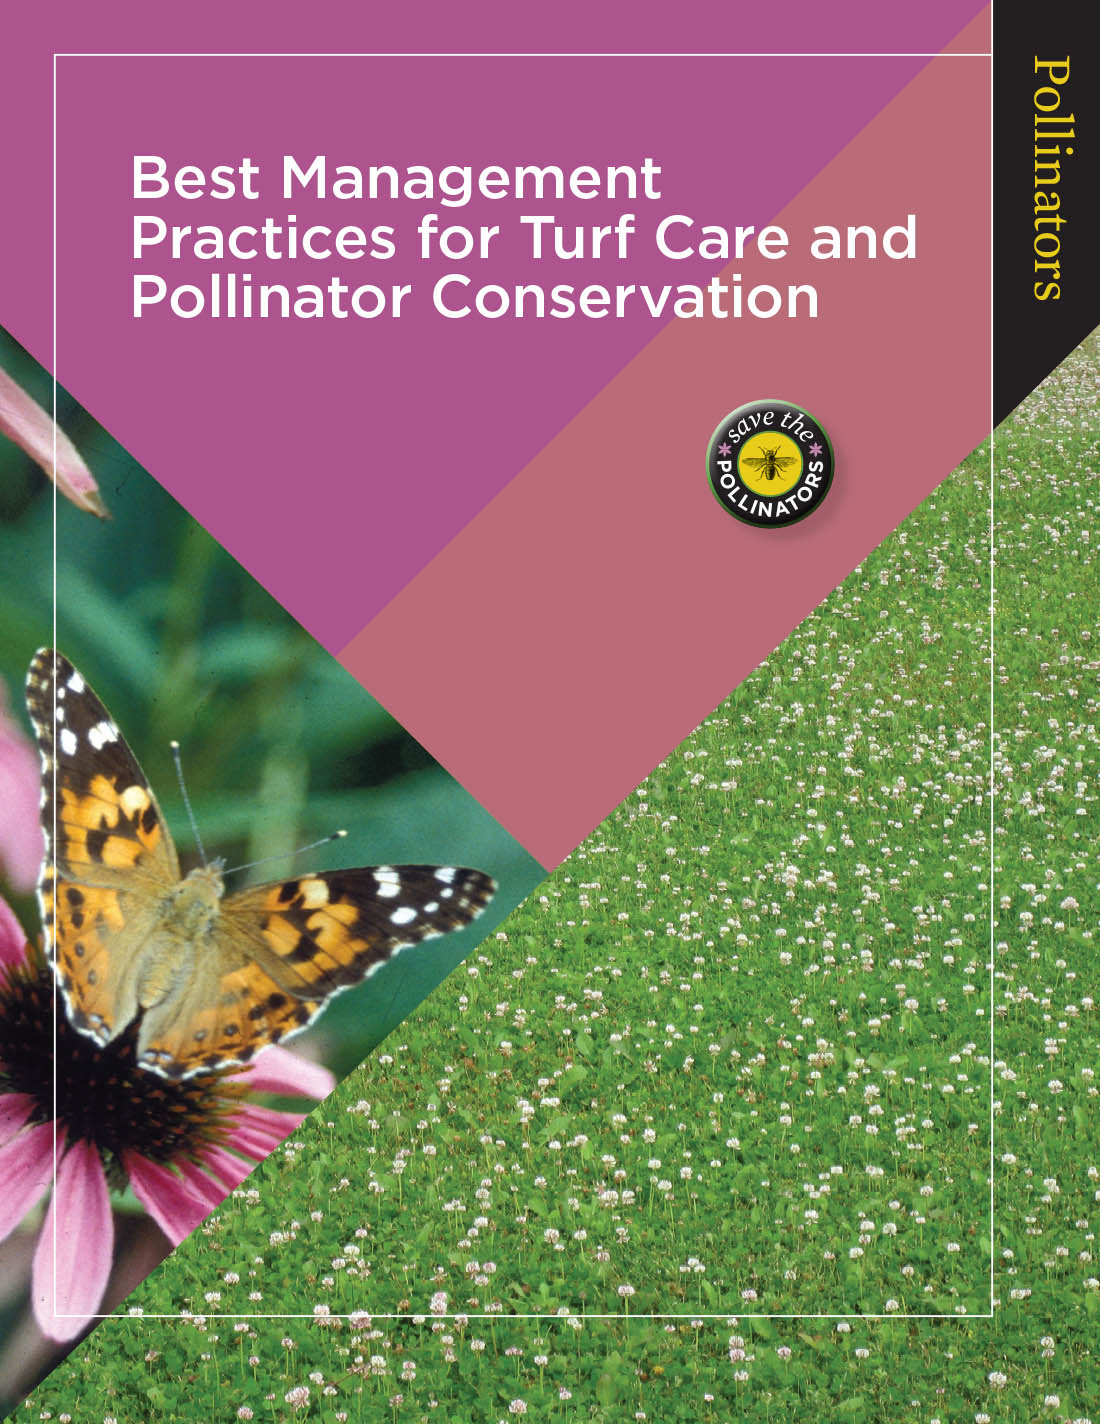 Pollinator publication design